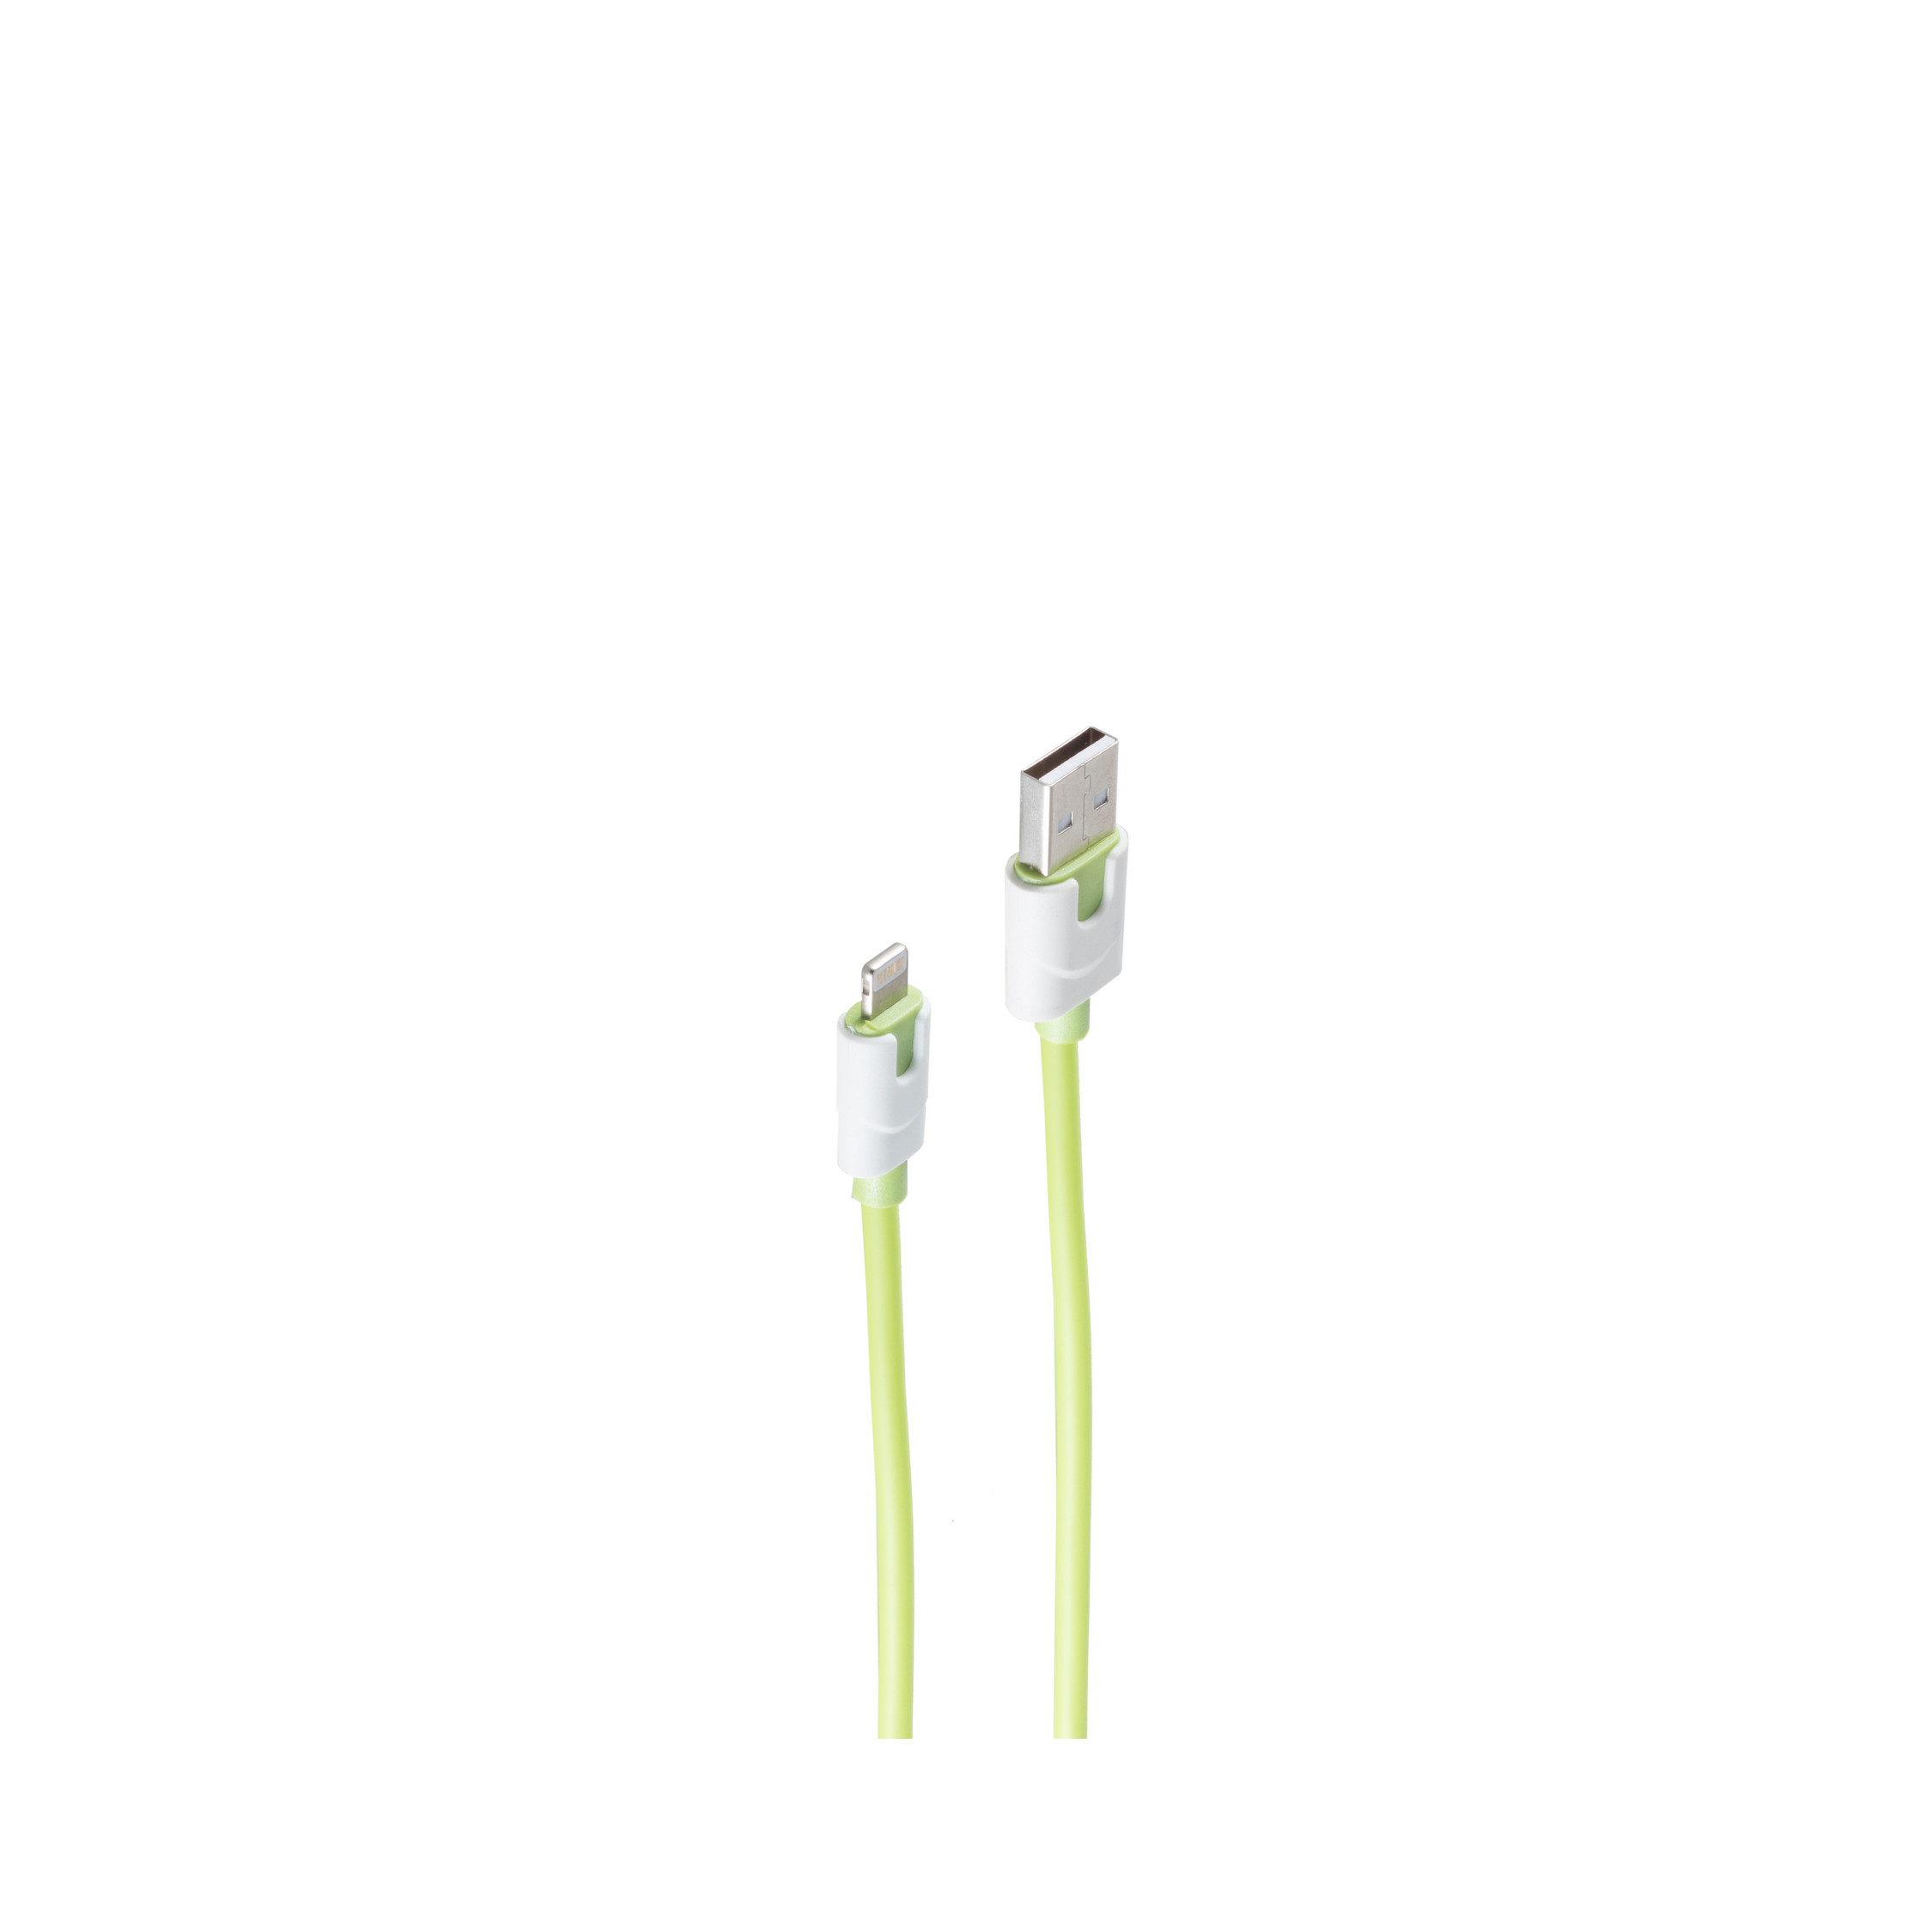 m, Ladekabel, grün, USB-Ladekabel 2 grün A SHIVERPEAKS Stecker auf 2m, USB 8-pin Stecker